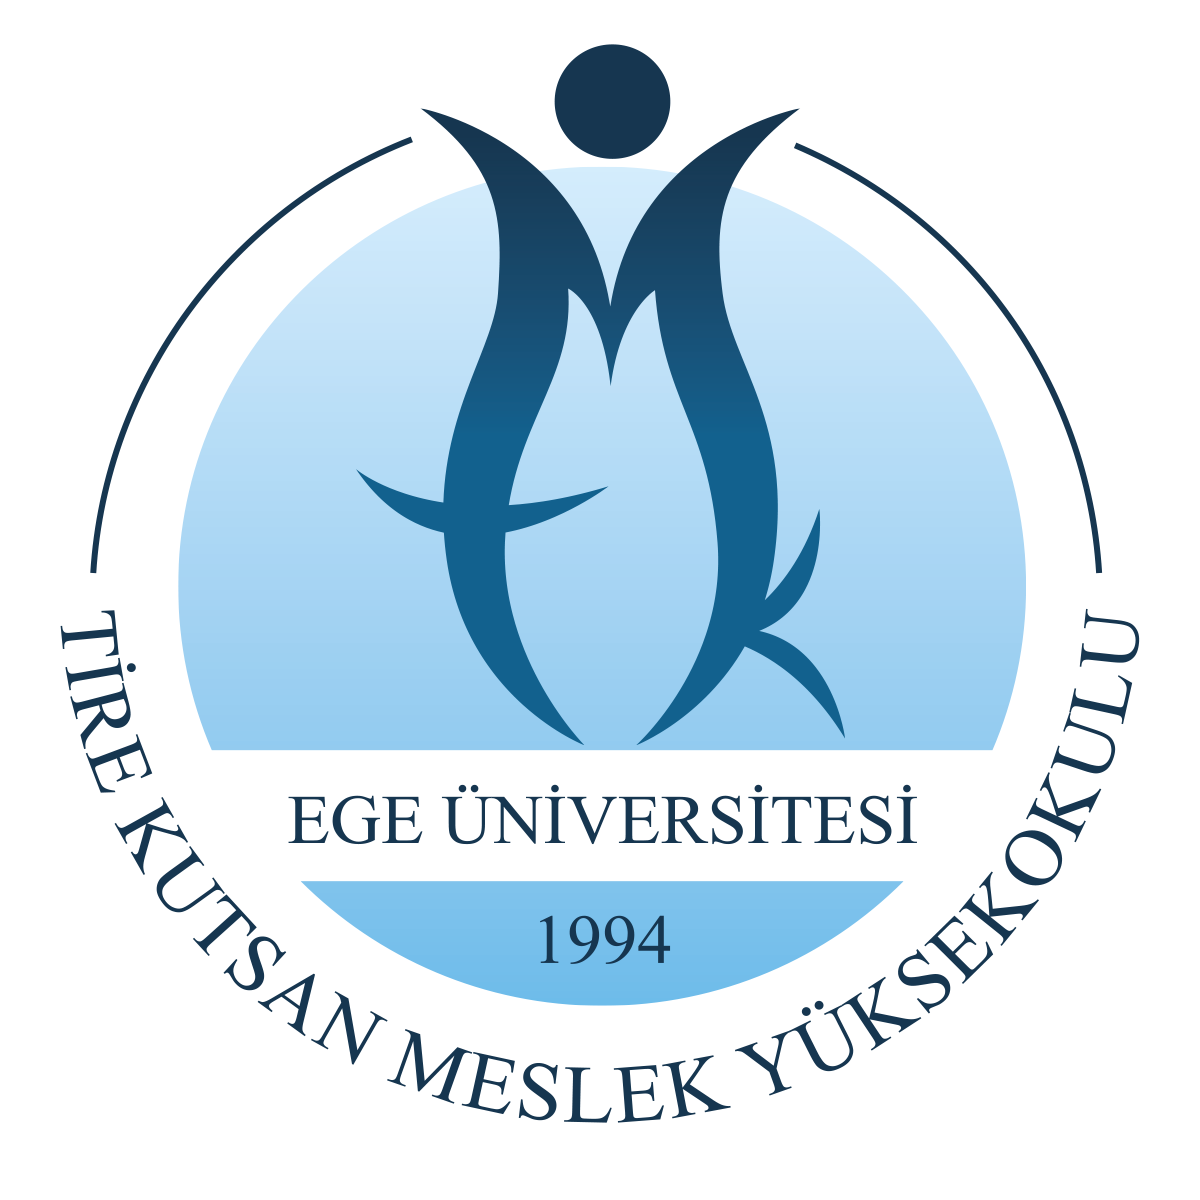 Tire Kutsan Meslek Yüksekokulu Logo photo - 1